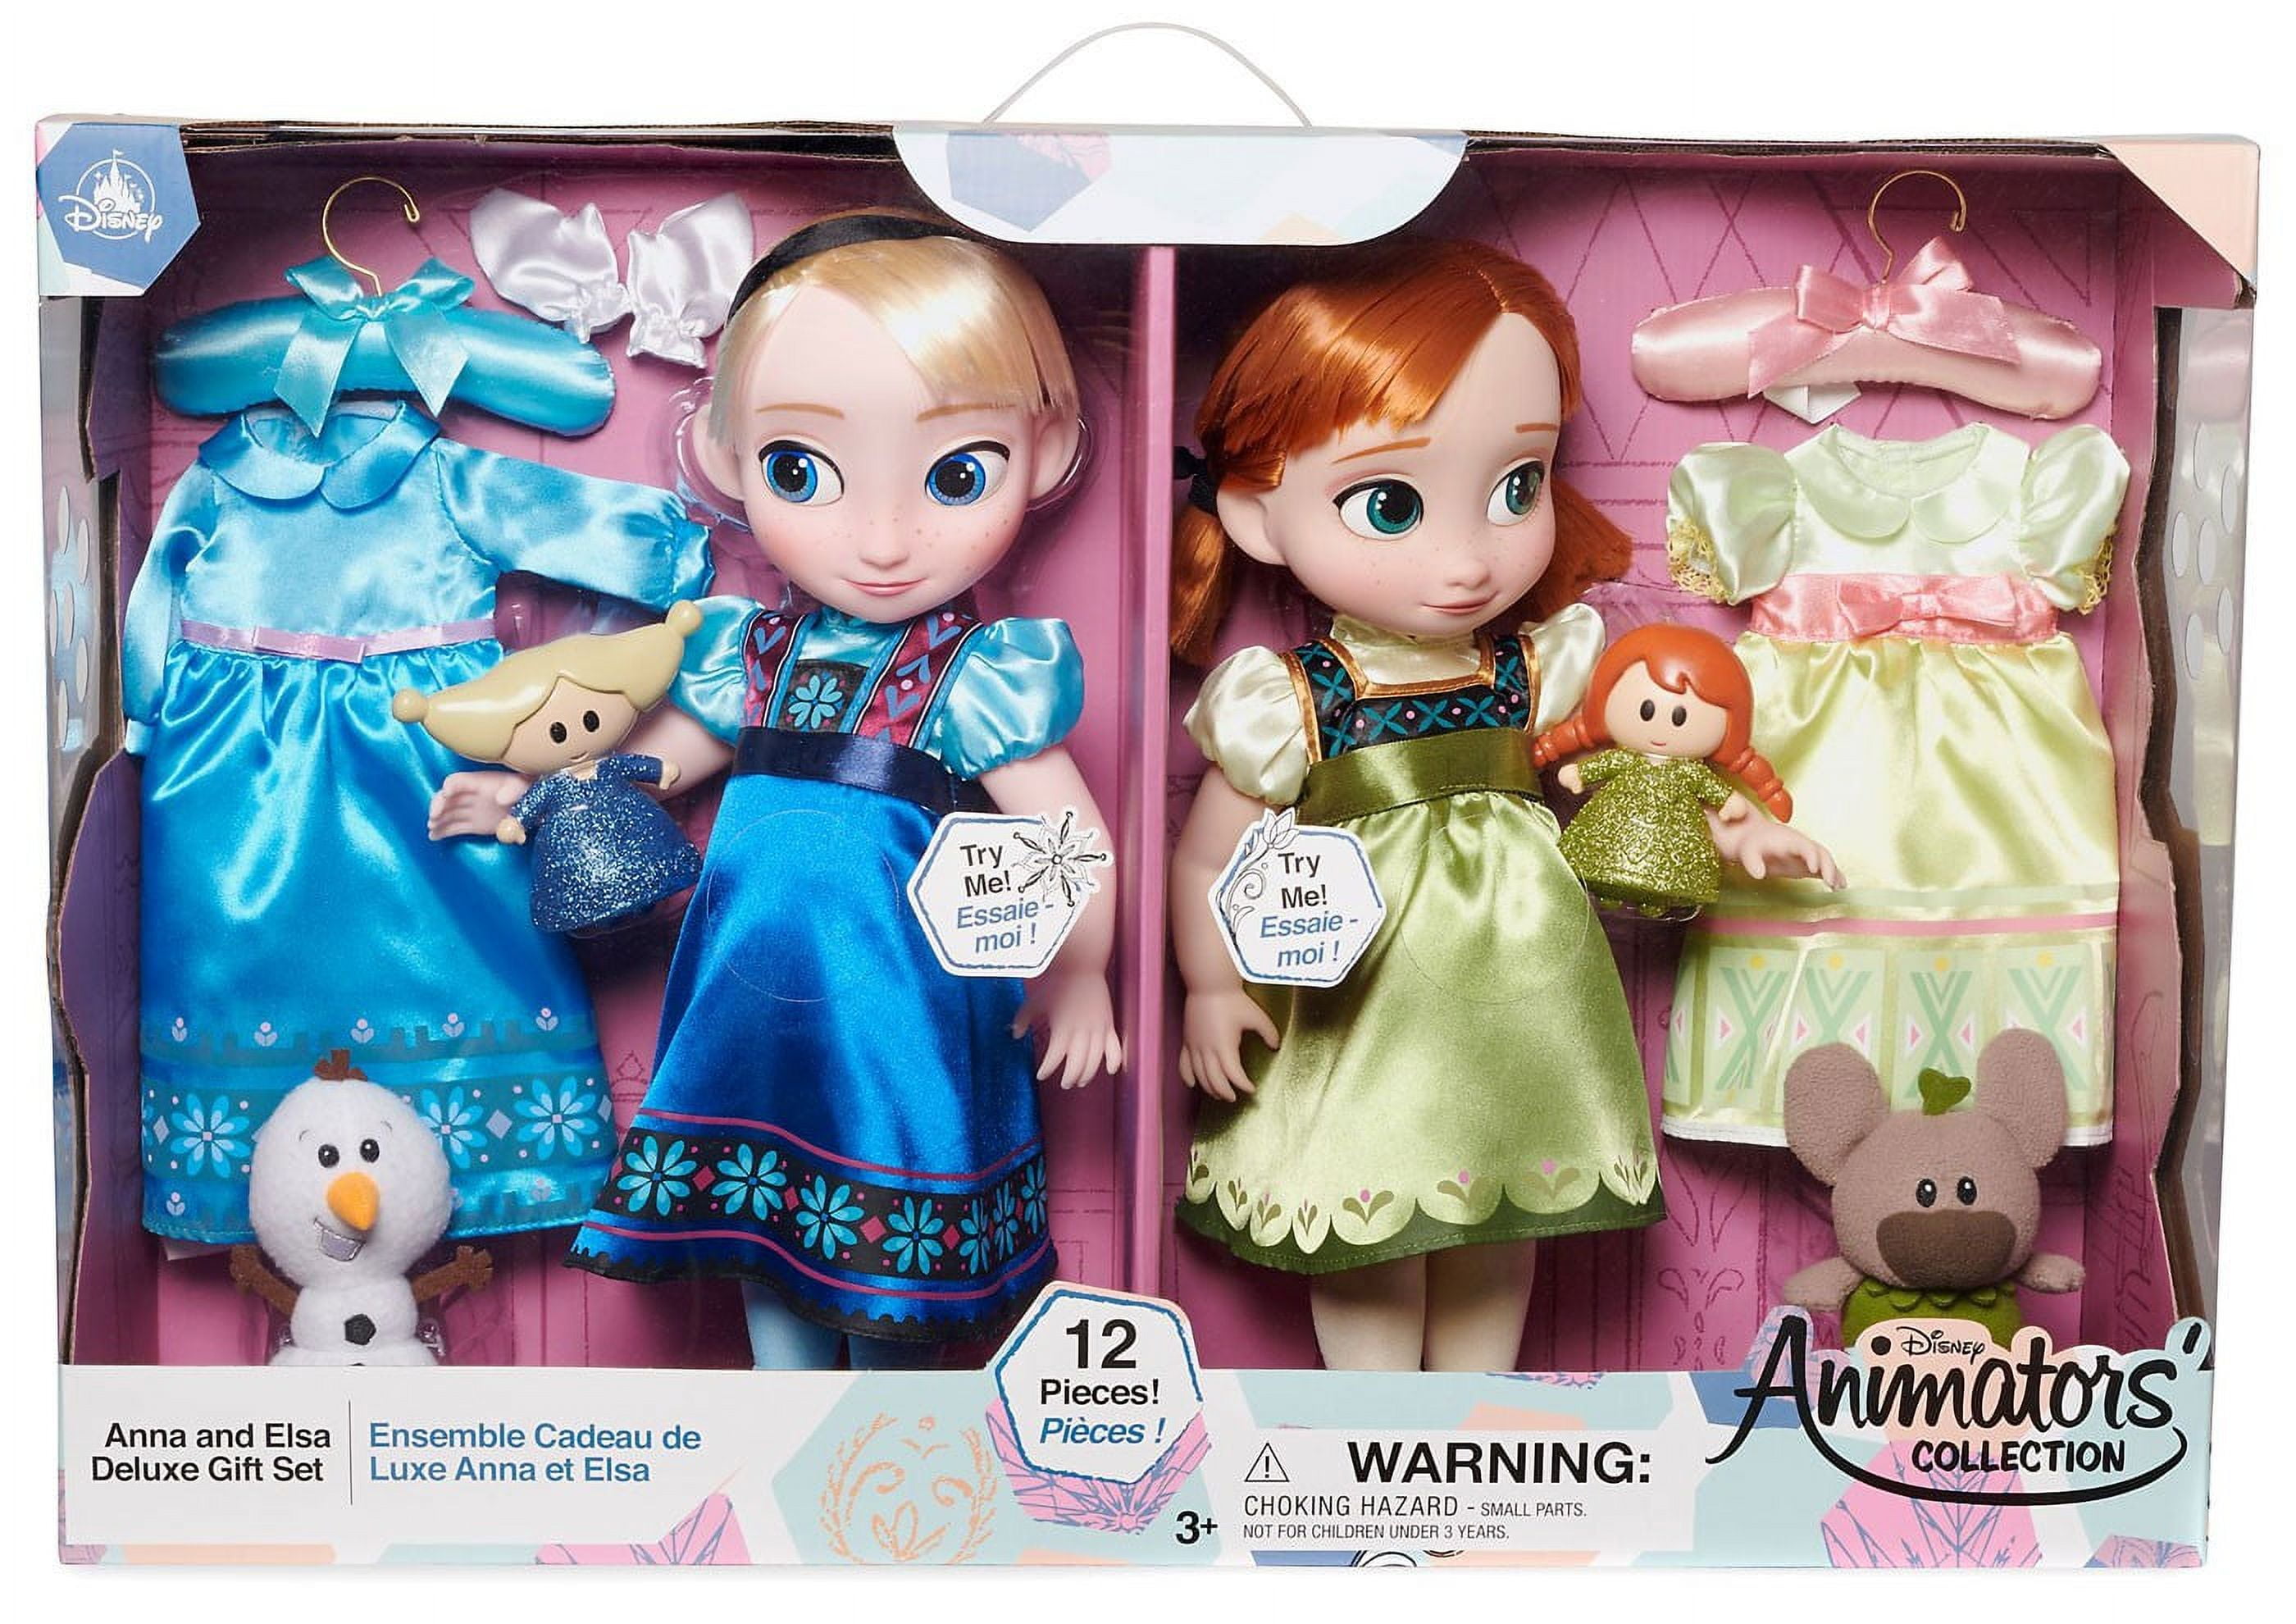 Disney Store Frozen Anna and Elsa Animators Collection Dolls Deluxe 2015 Set  - Walmart.com